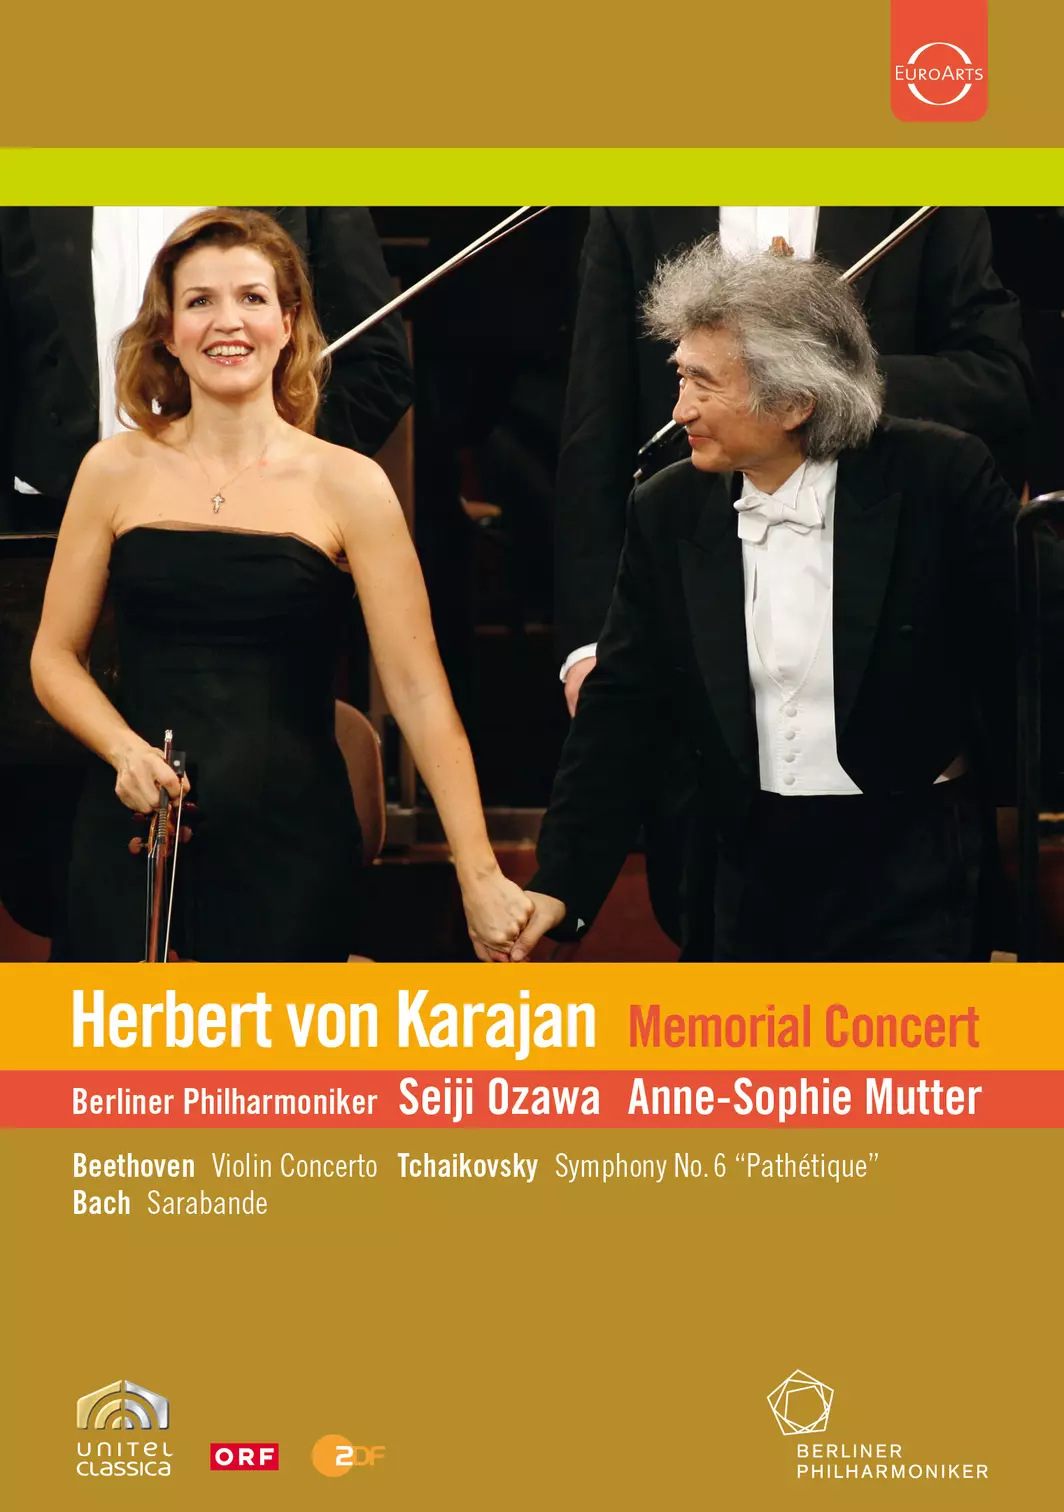 Berliner Philharmoniker - Karajan Memorial Concert